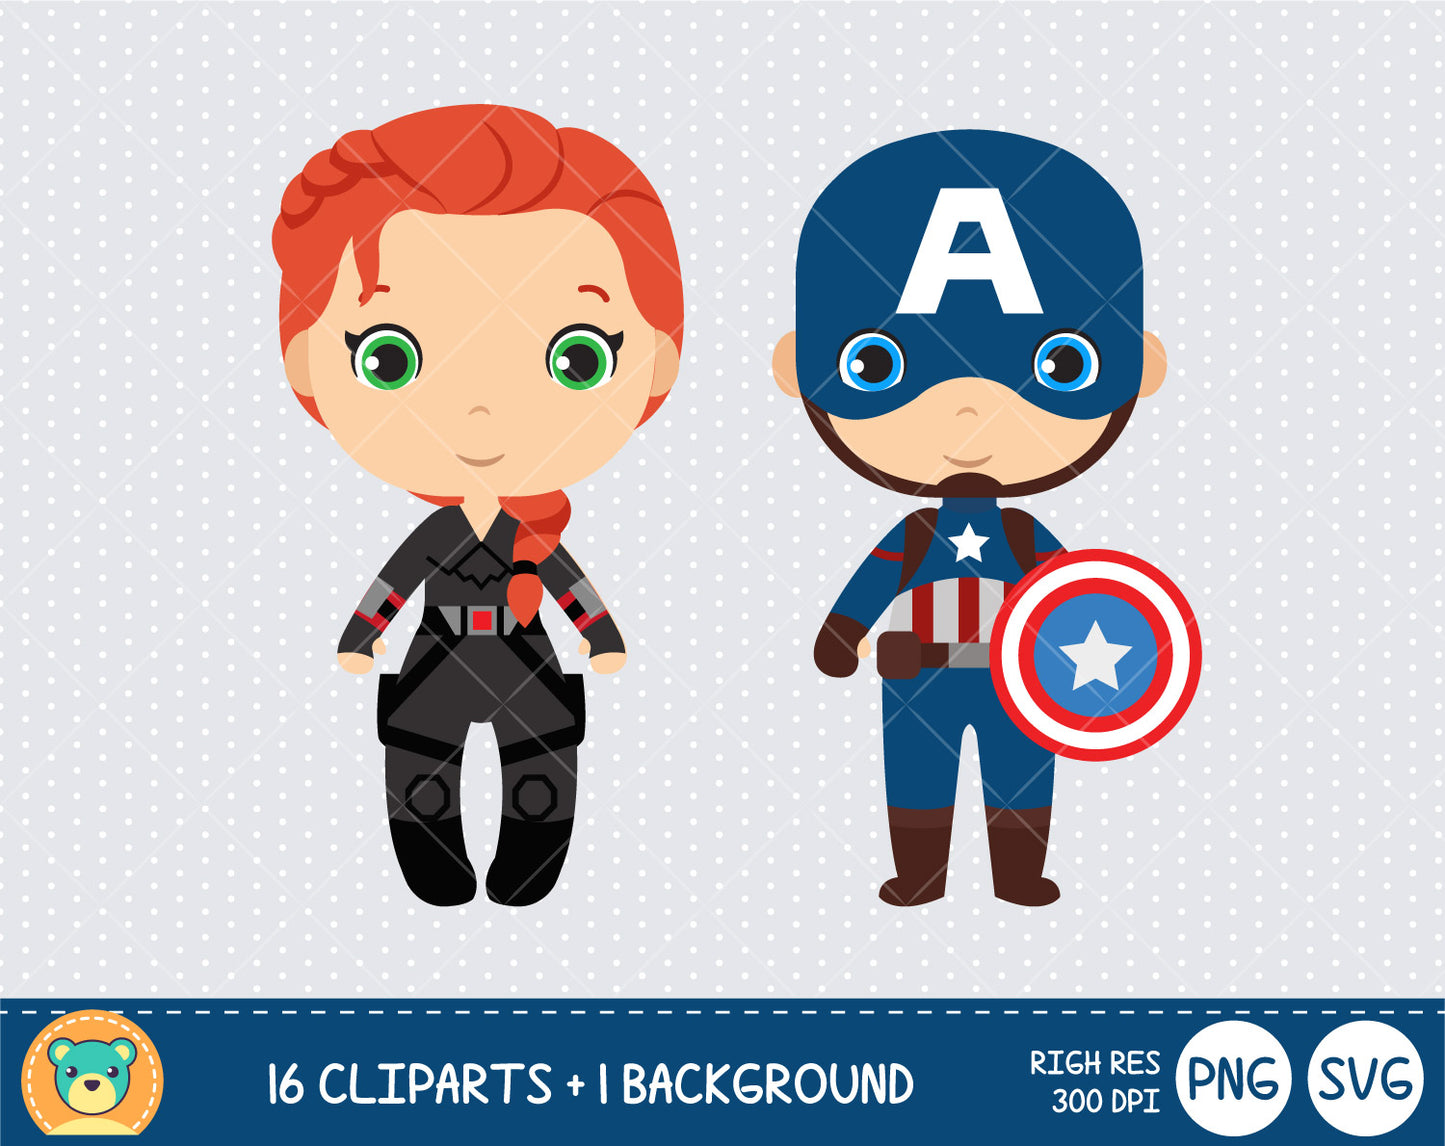 Cute Avengers clipart set, Superheroes clip art for decoration, scrapbooking, PNG, SVG, instant download